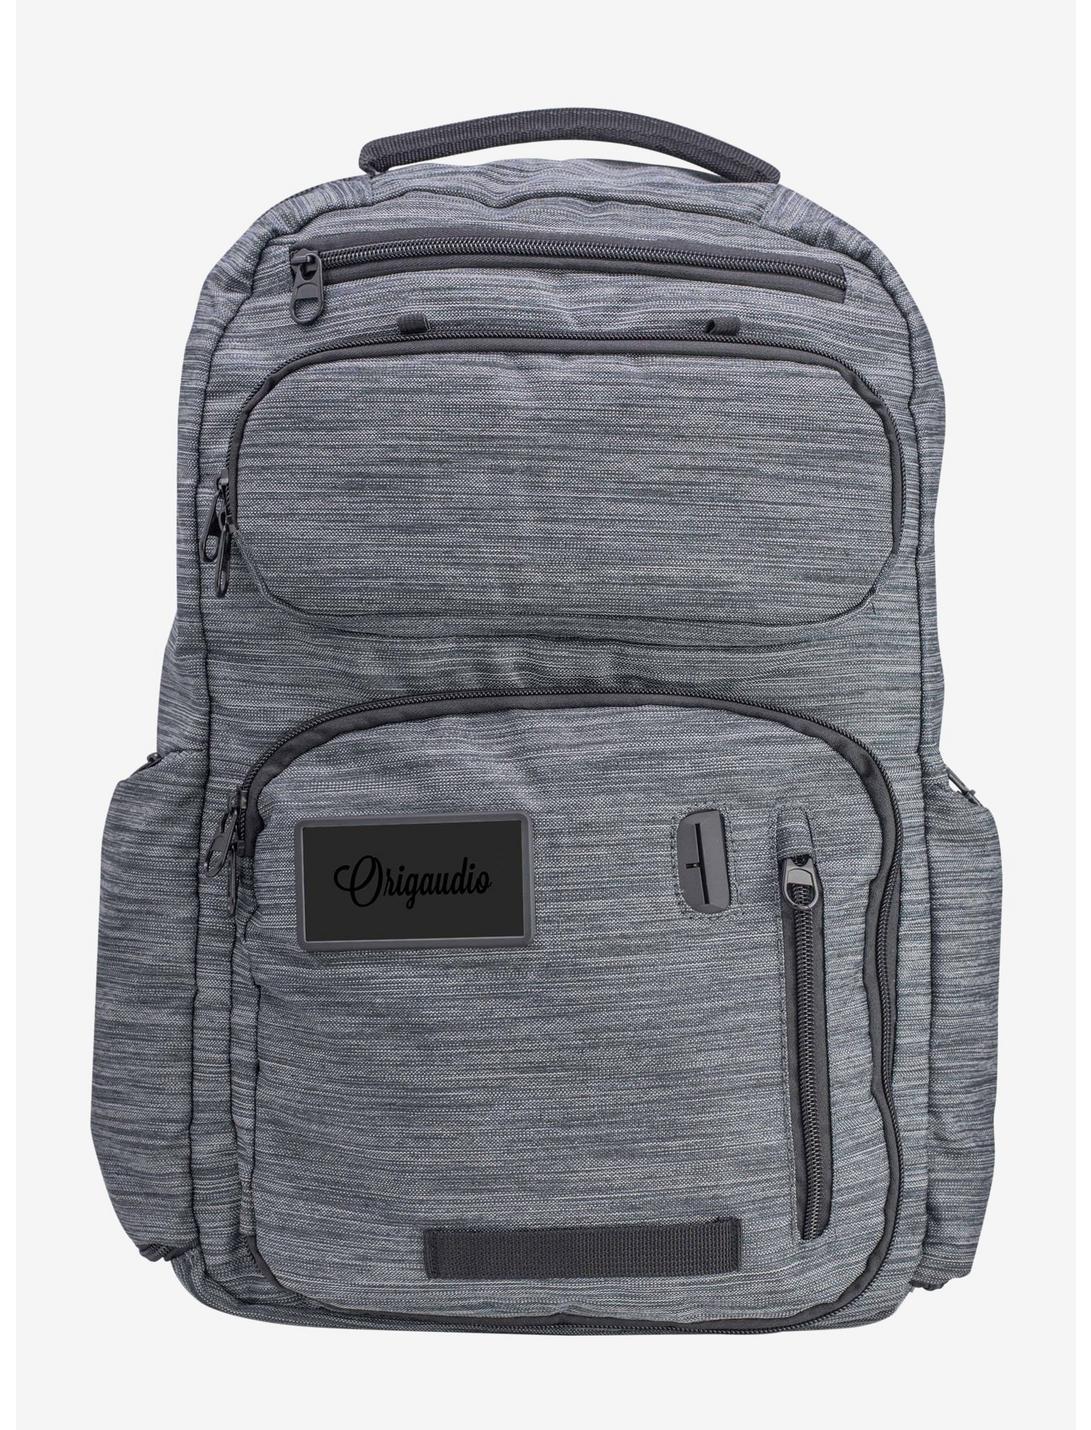 Embarcadero Grey Backpack, , hi-res